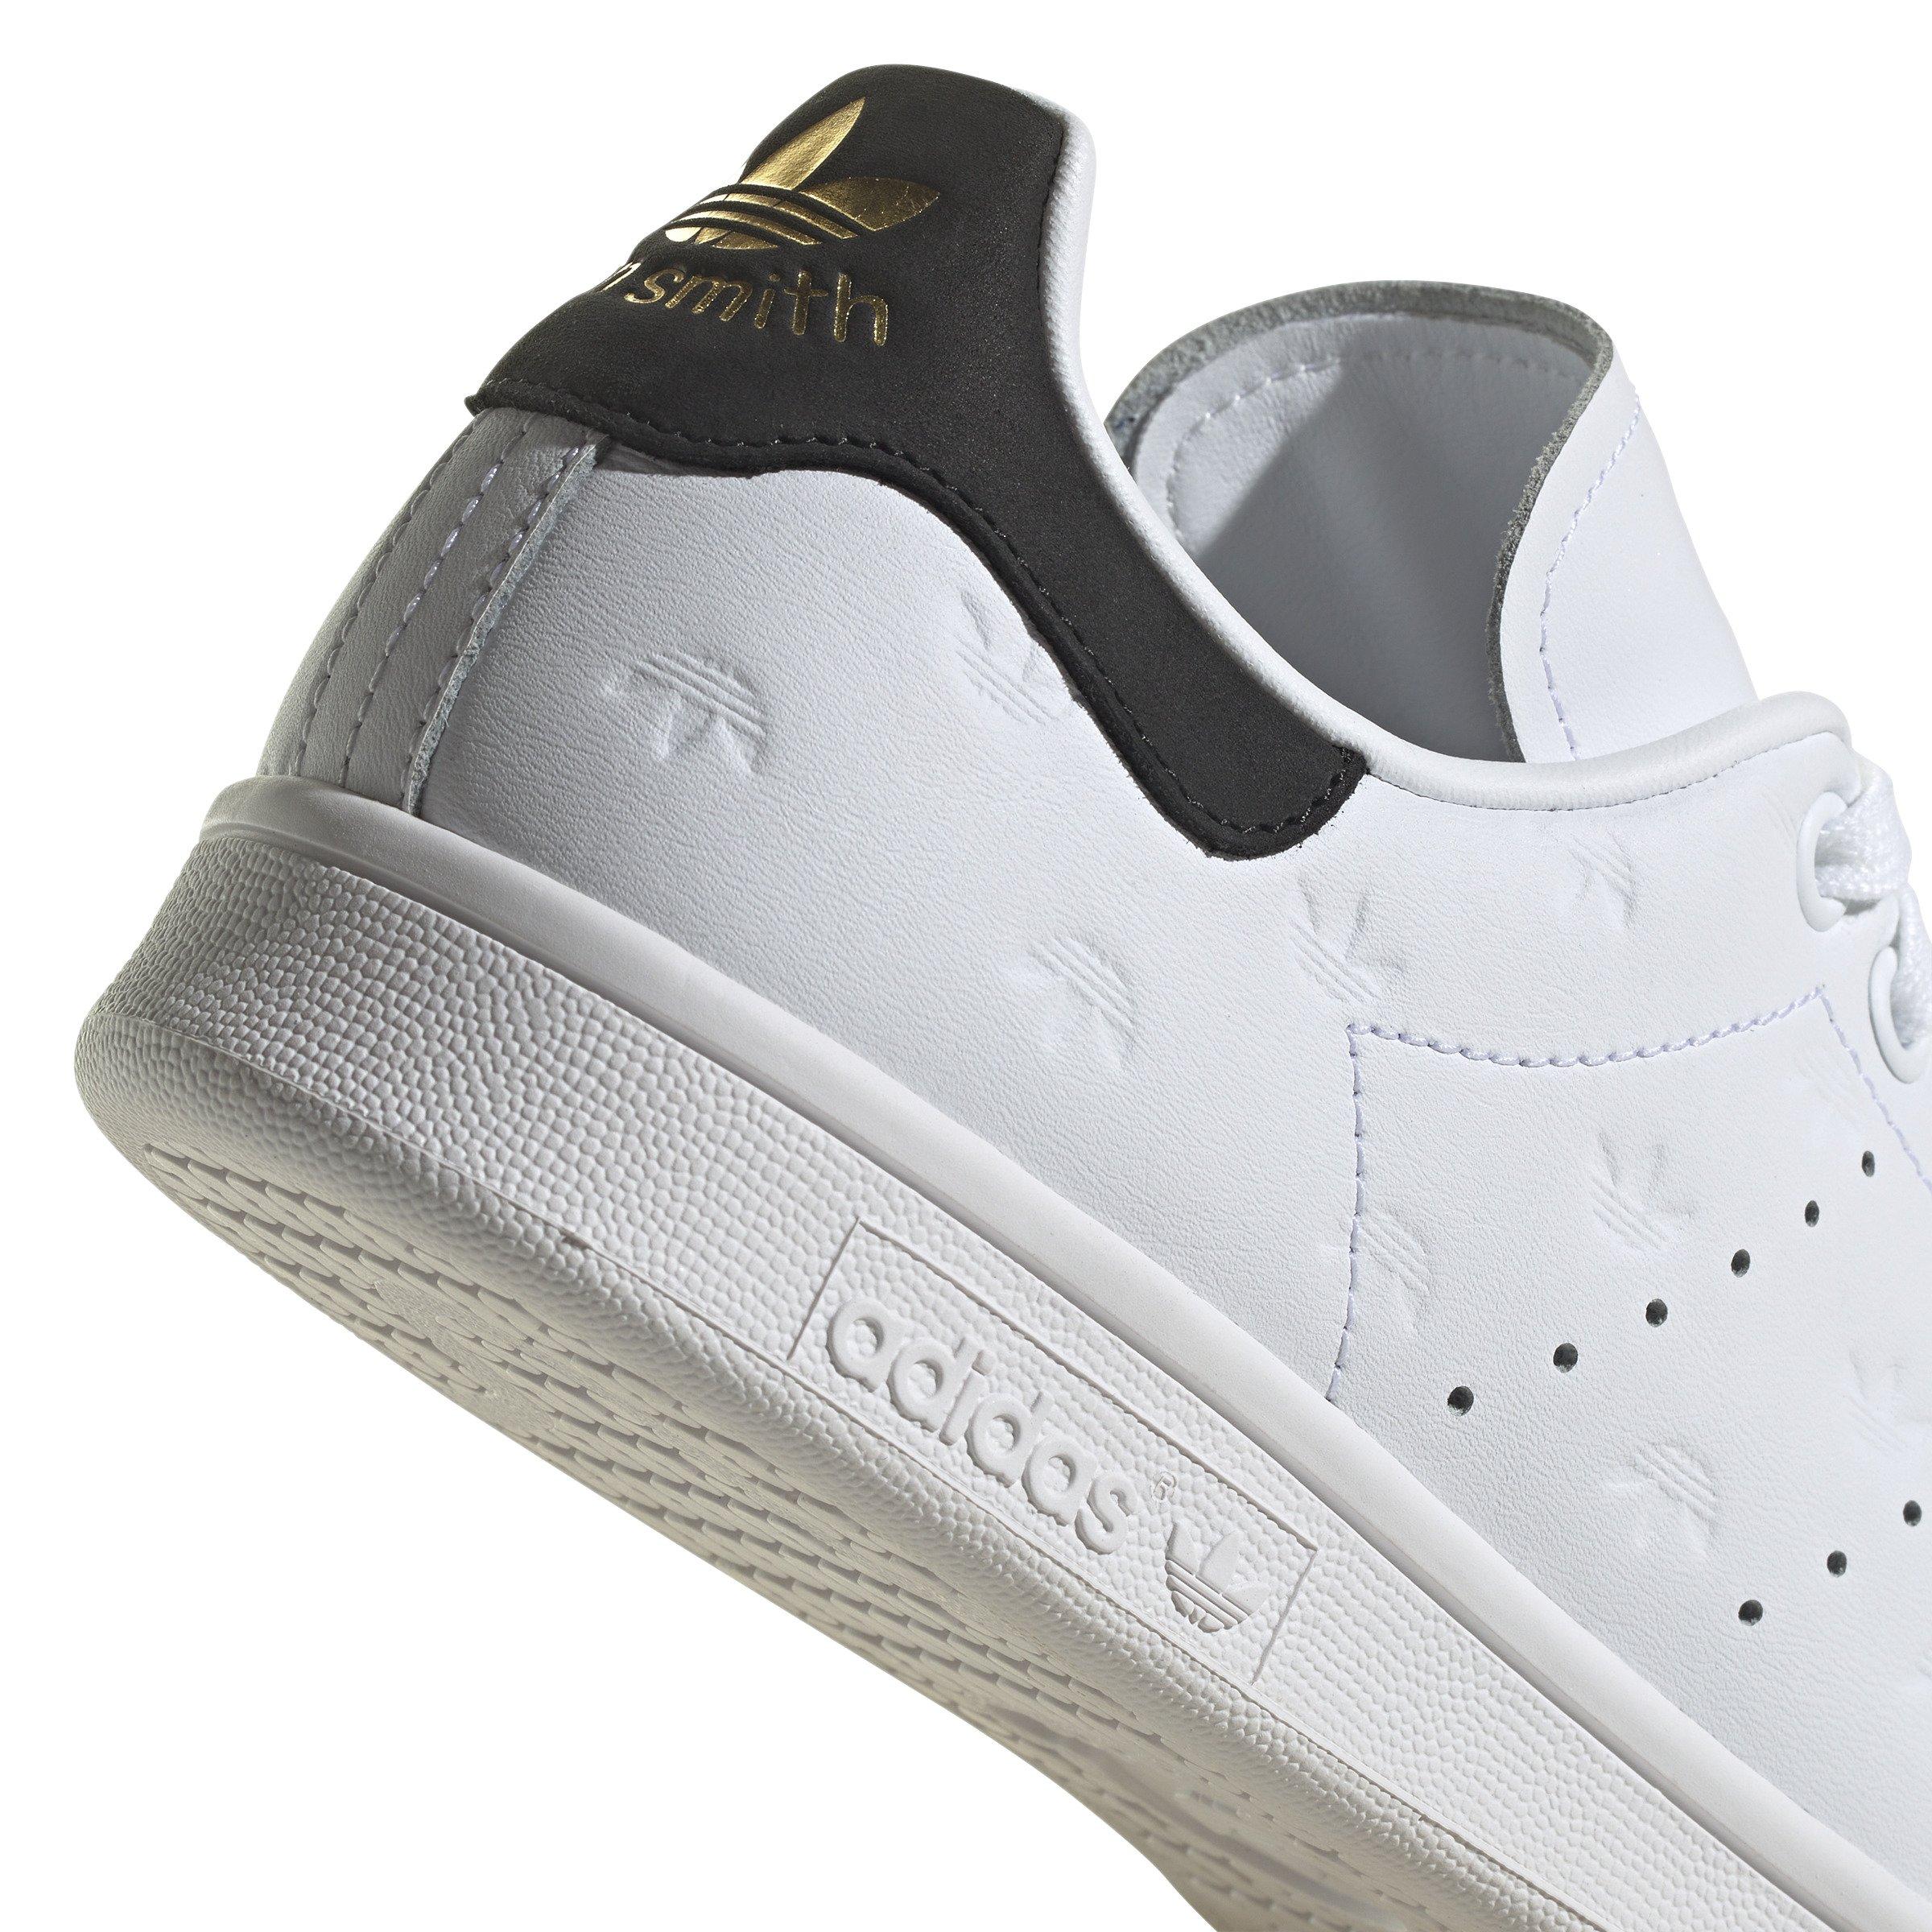 BUY Adidas Superstar Stan Smith Footwear White Core Black Gold